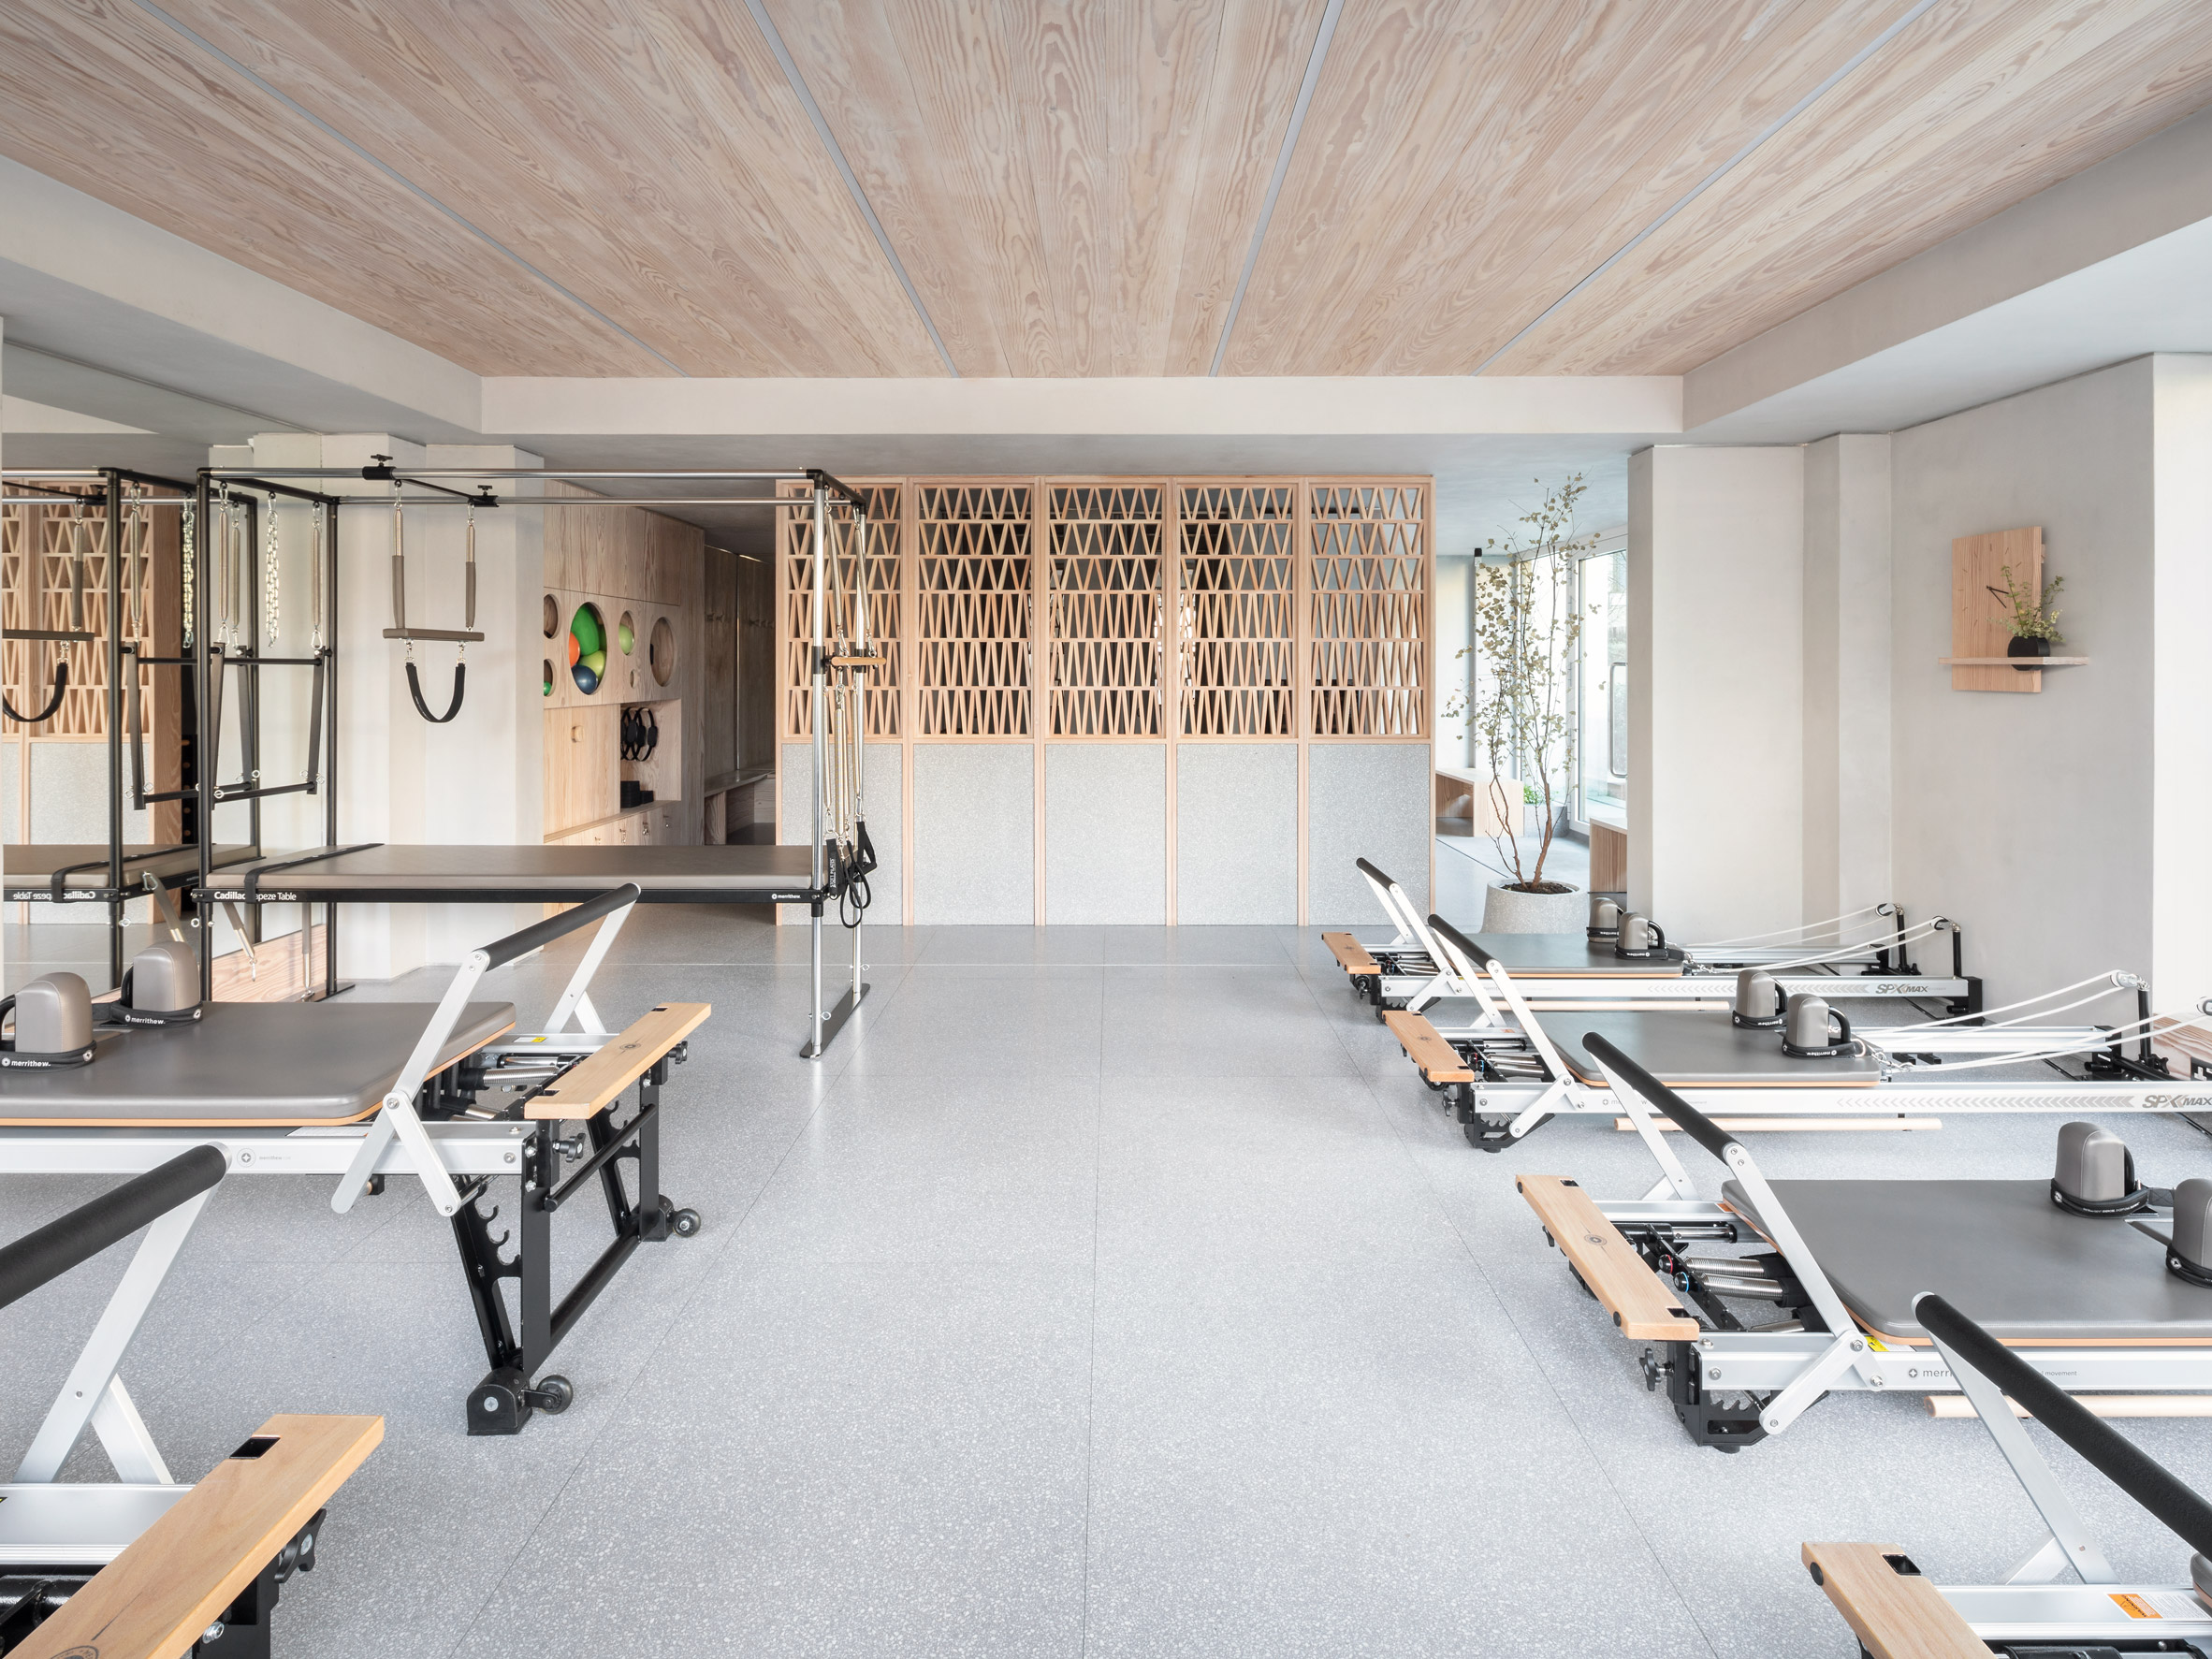 Core Kensington pilates studio blends Mexican and Norwegian design